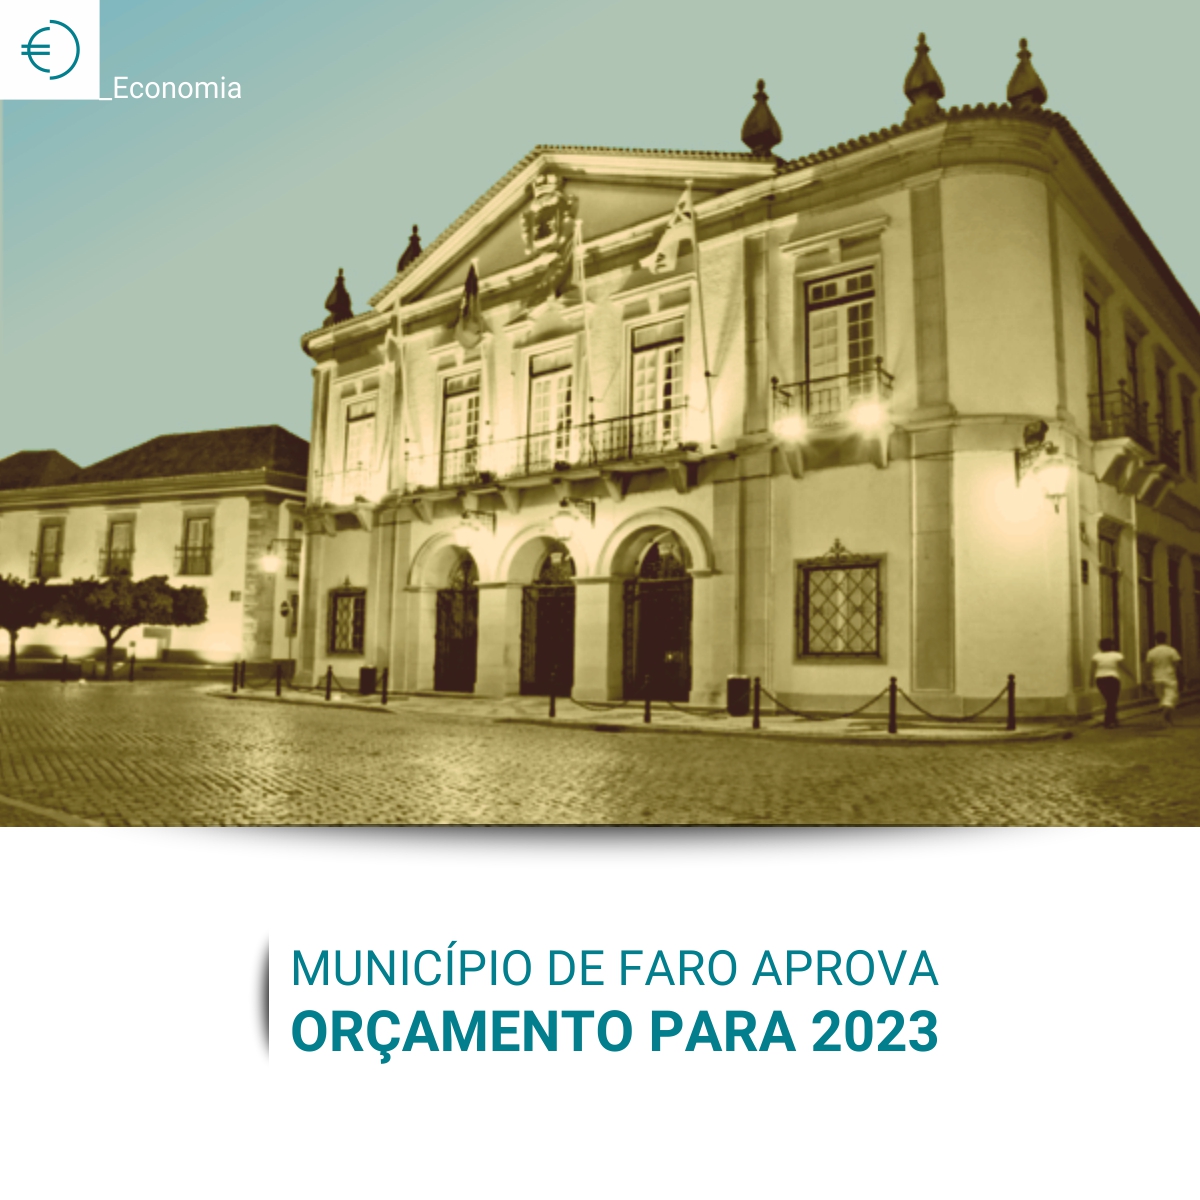 Município de Faro aprova orçamento para 2023